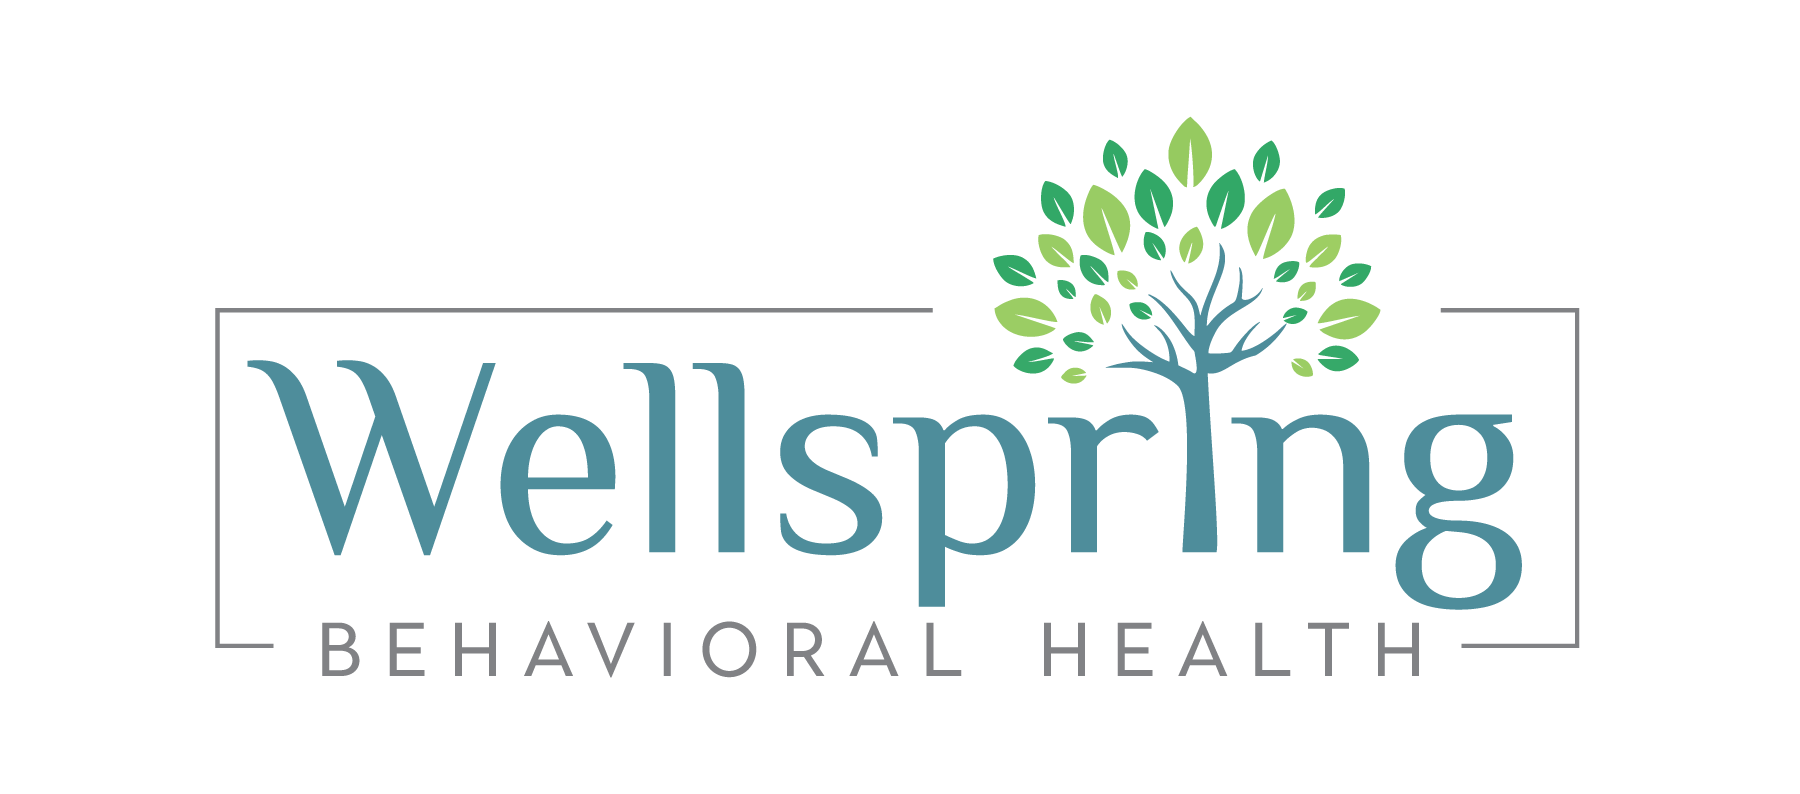 Wellspring Behavioral Health wordmark